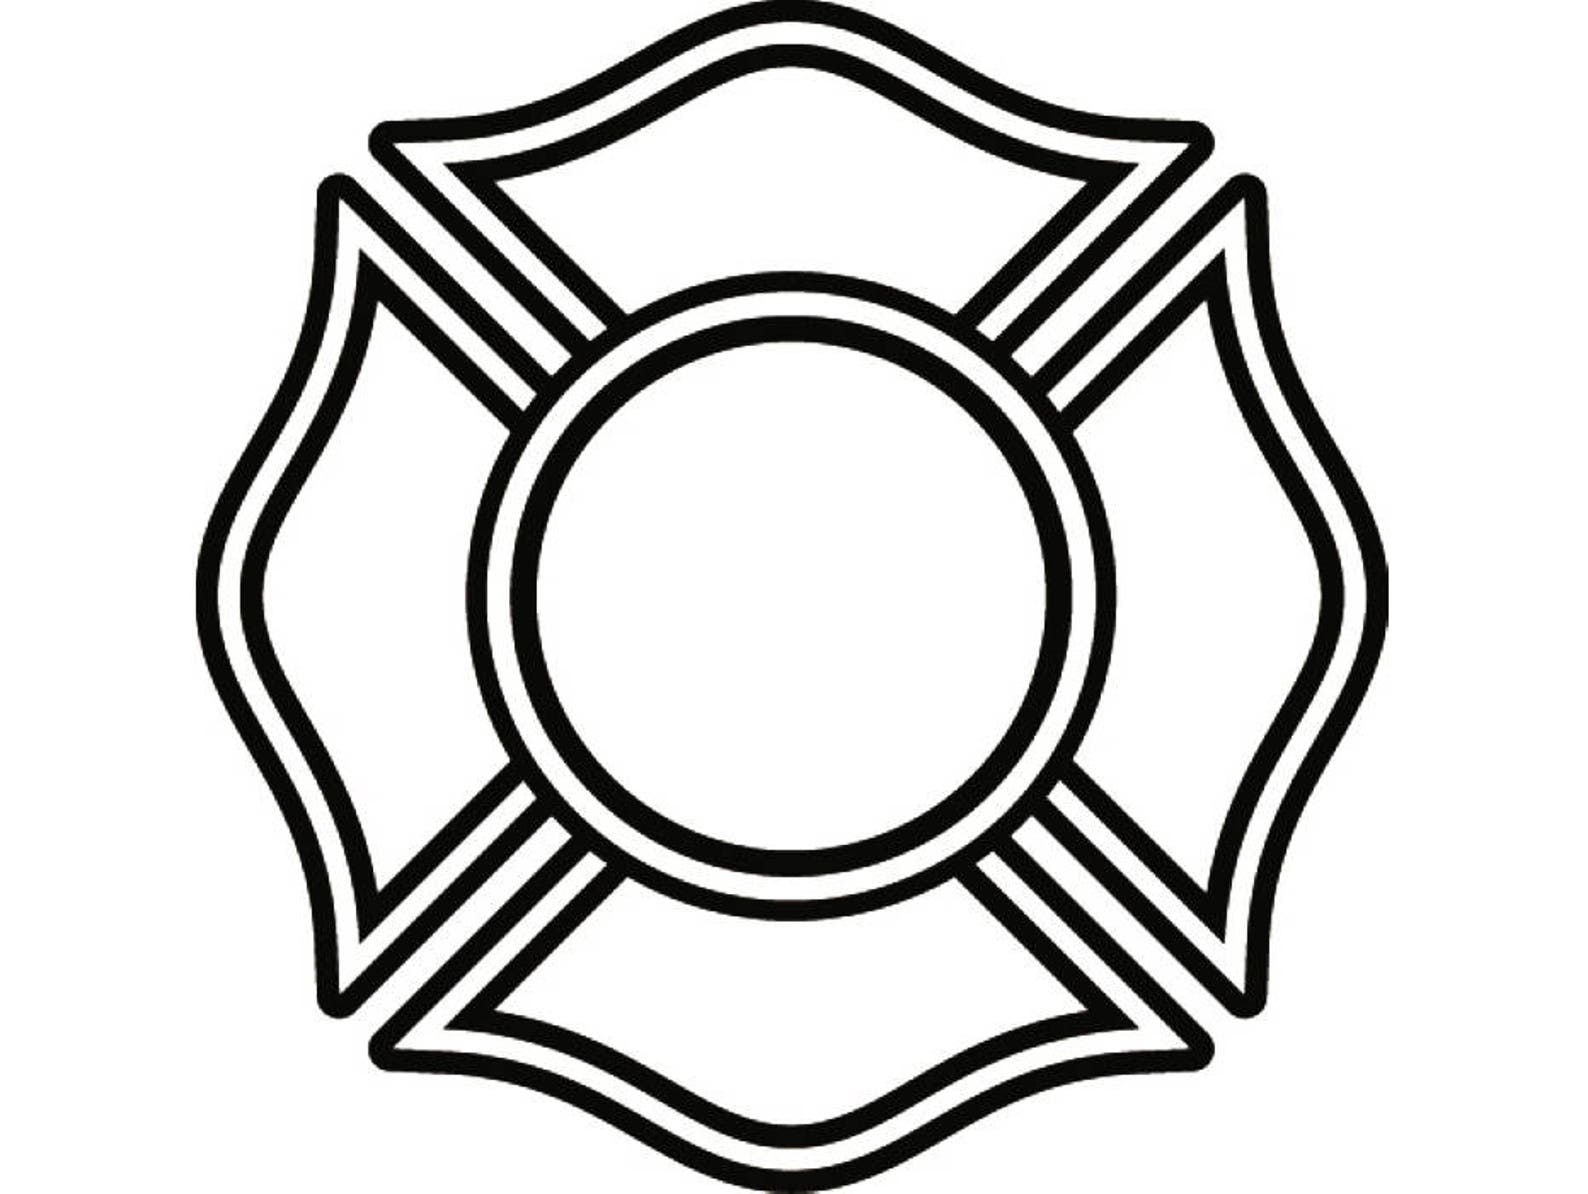 Nine shield. Rescue Shield. Пожарный контур. Firefighter logo. Blank logo.